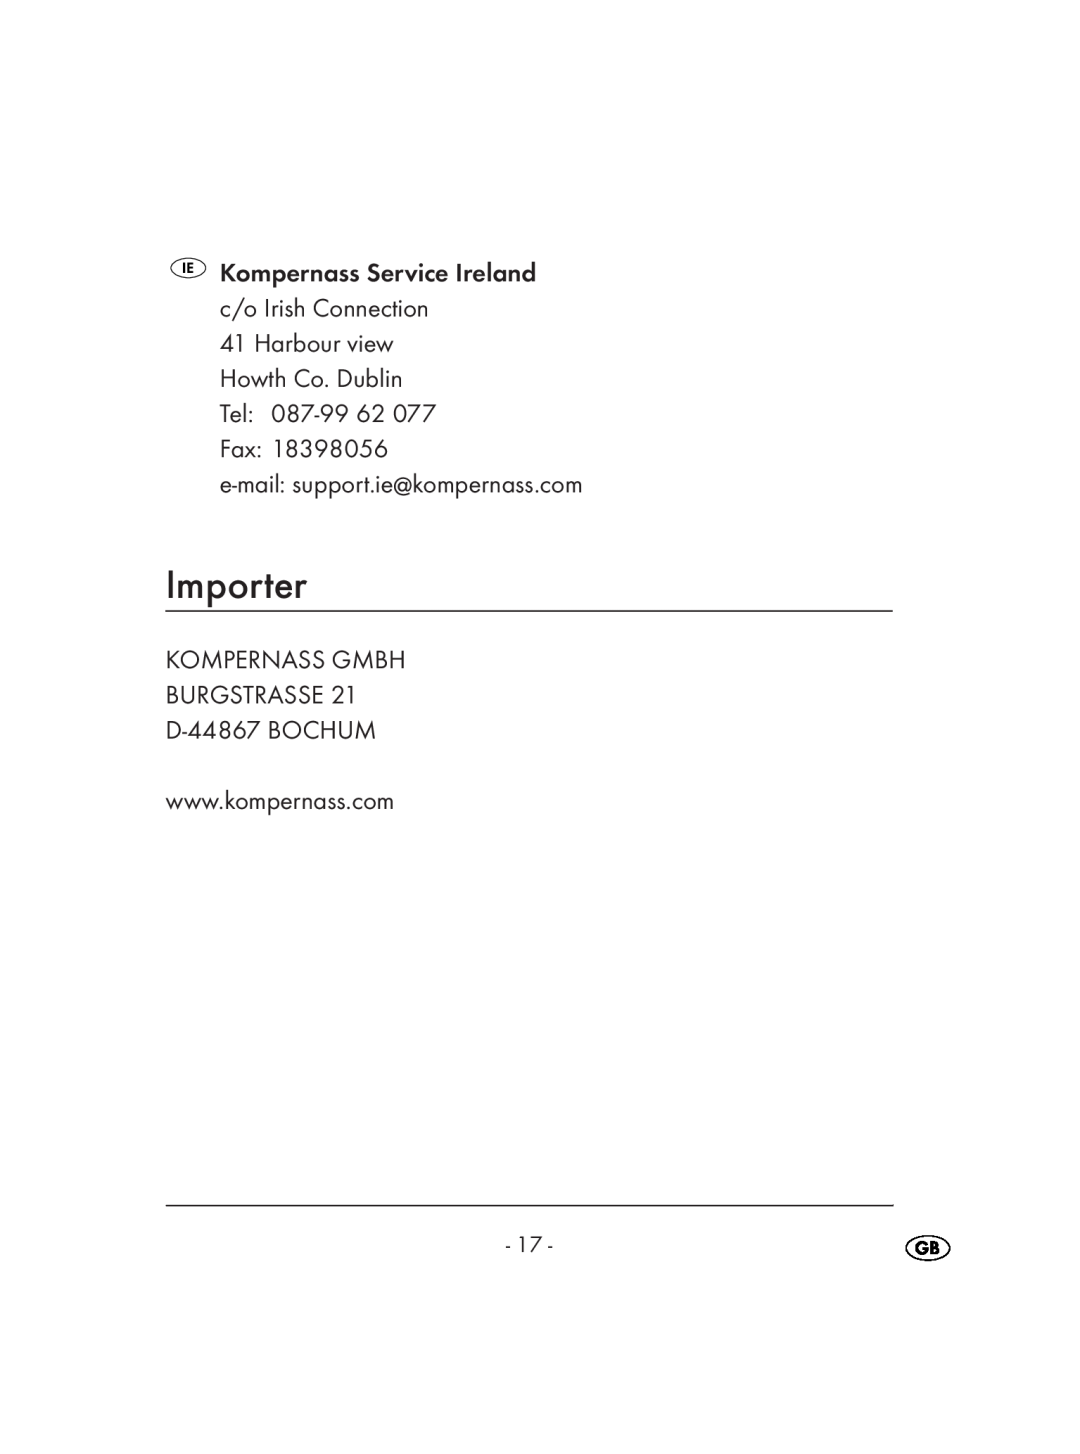 Kompernass KH 4083 manual Importer, KOMPERNASS GMBH BURGSTRASSE D-44867BOCHUM 